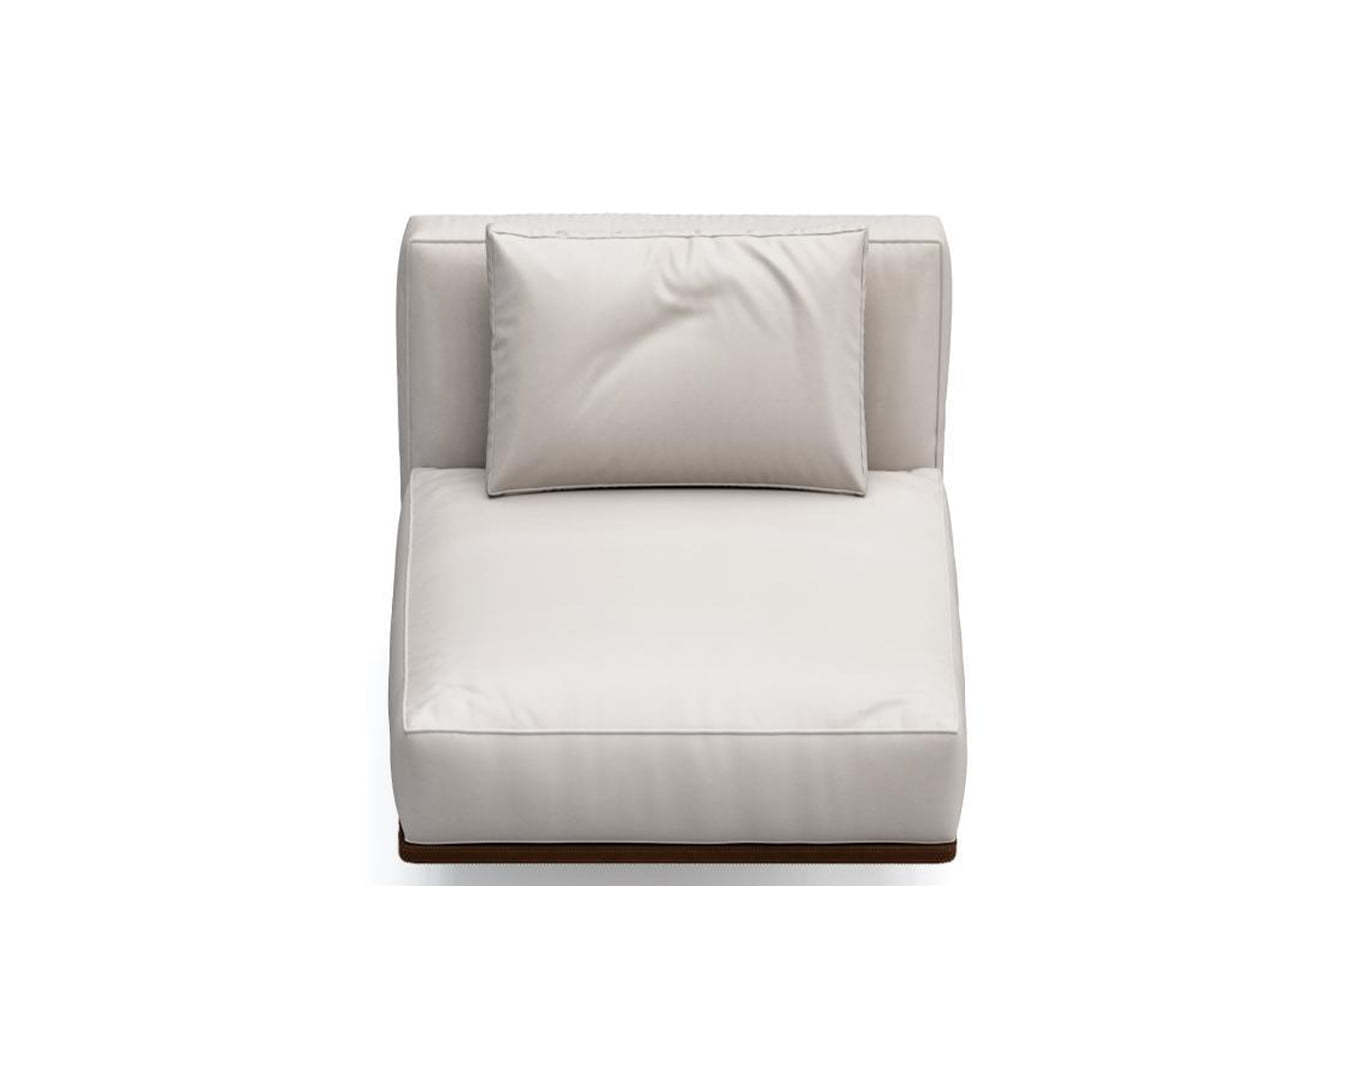 Modern Minimalis Sofa white and brown list single seat